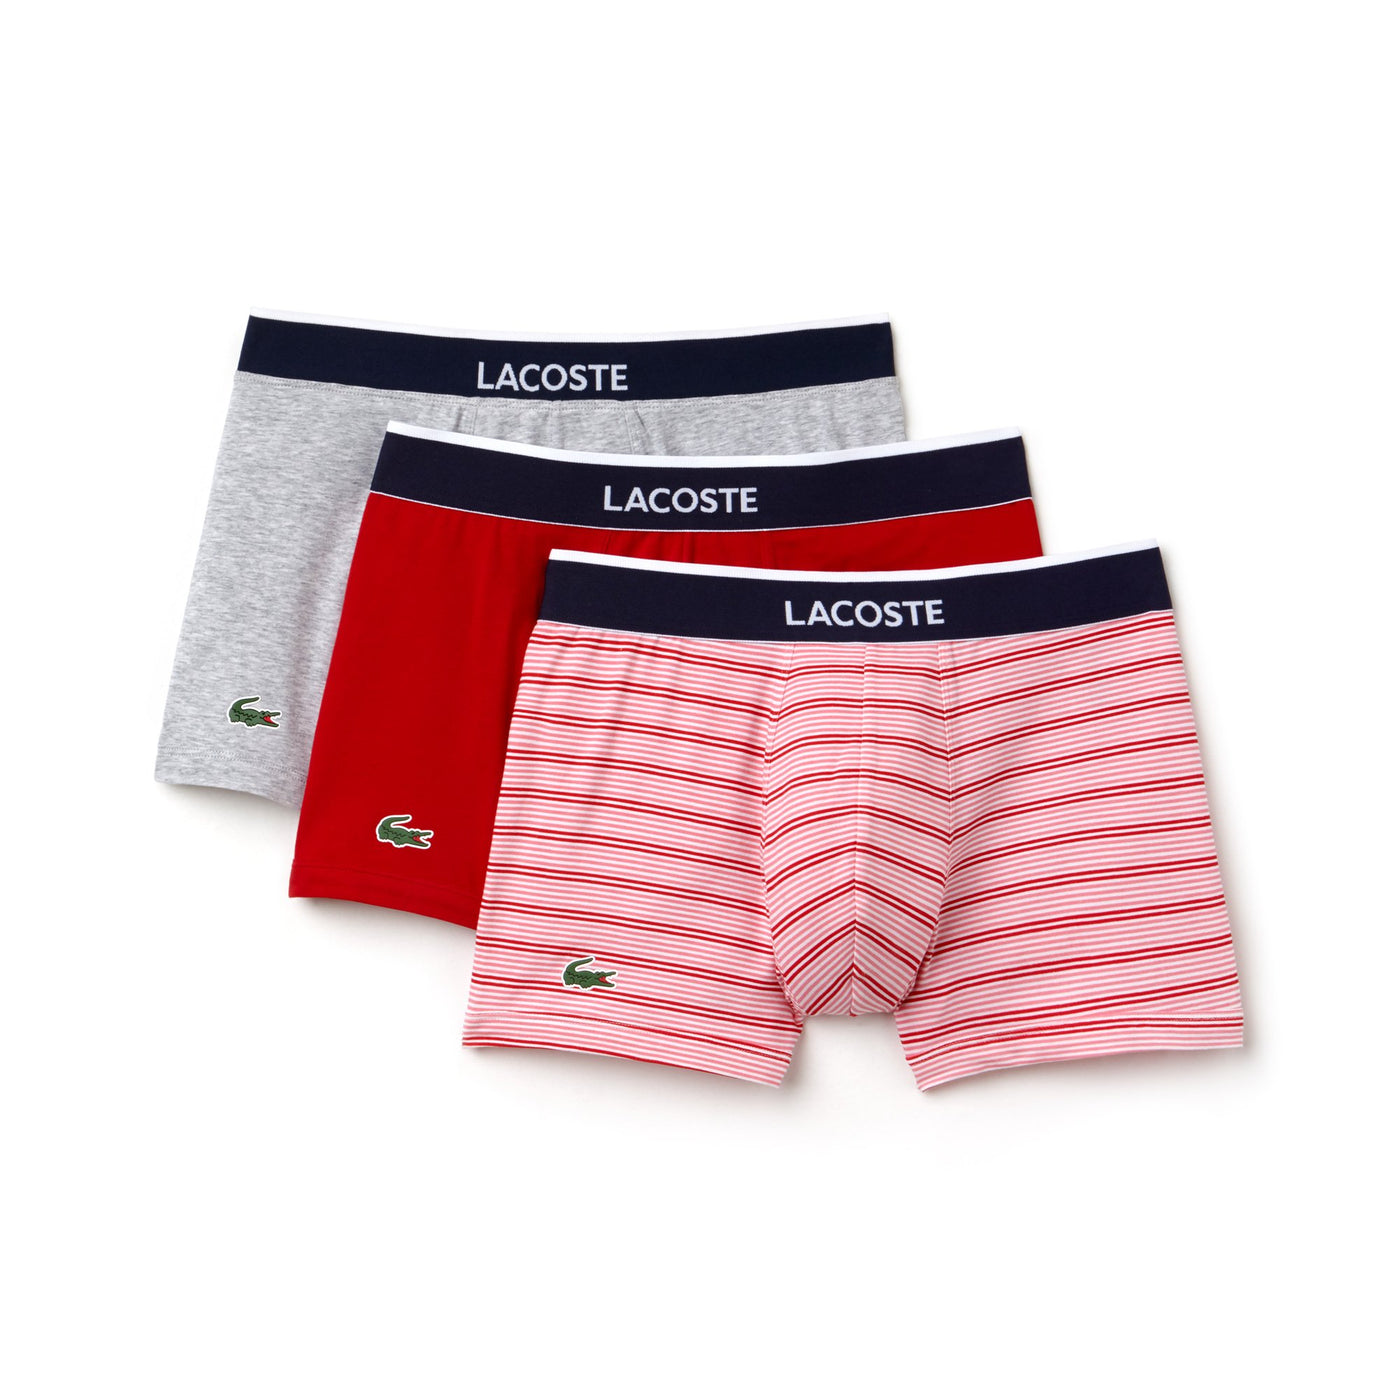 Lacoste Trunks - Pack of 3 - David Scaife Menswear